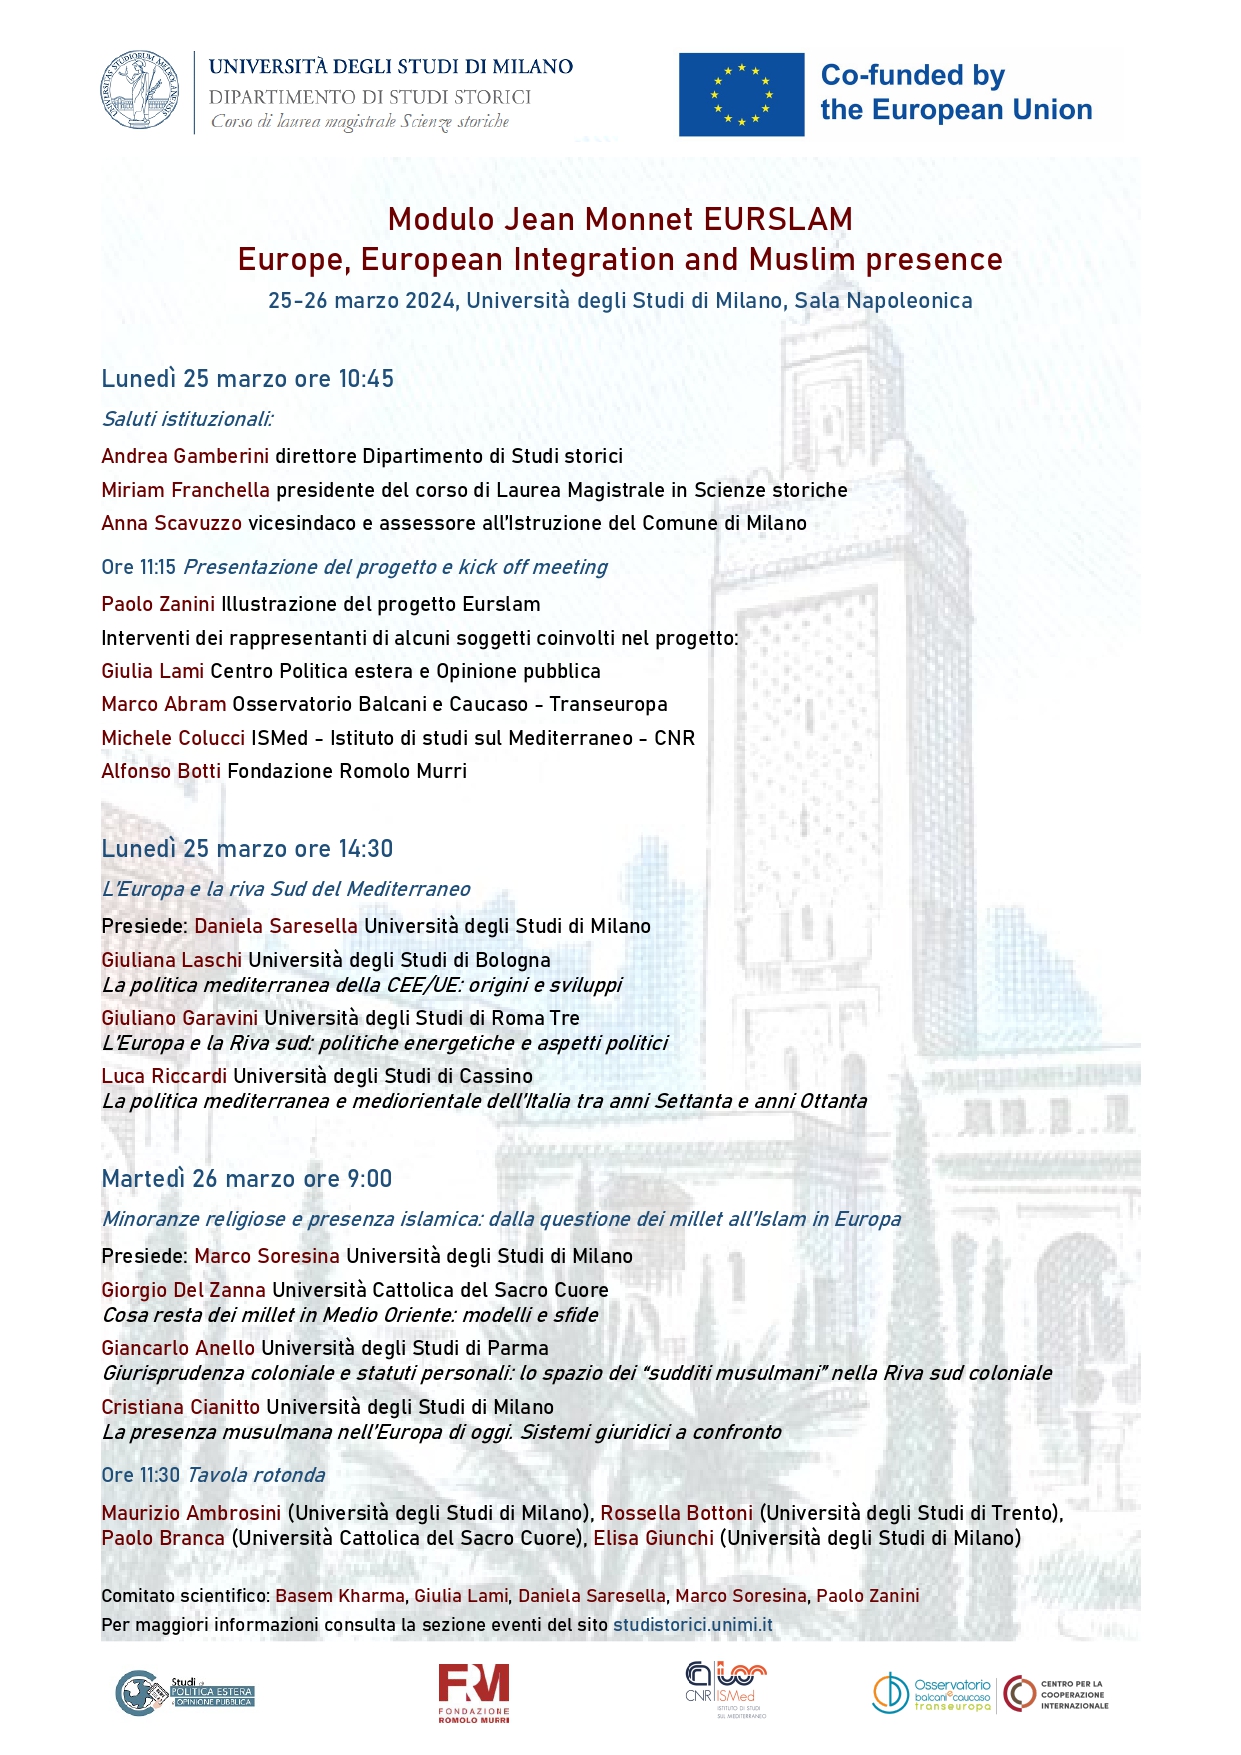 Jean Monnet module EURSLAM - Europe, European Integration and Muslim presence